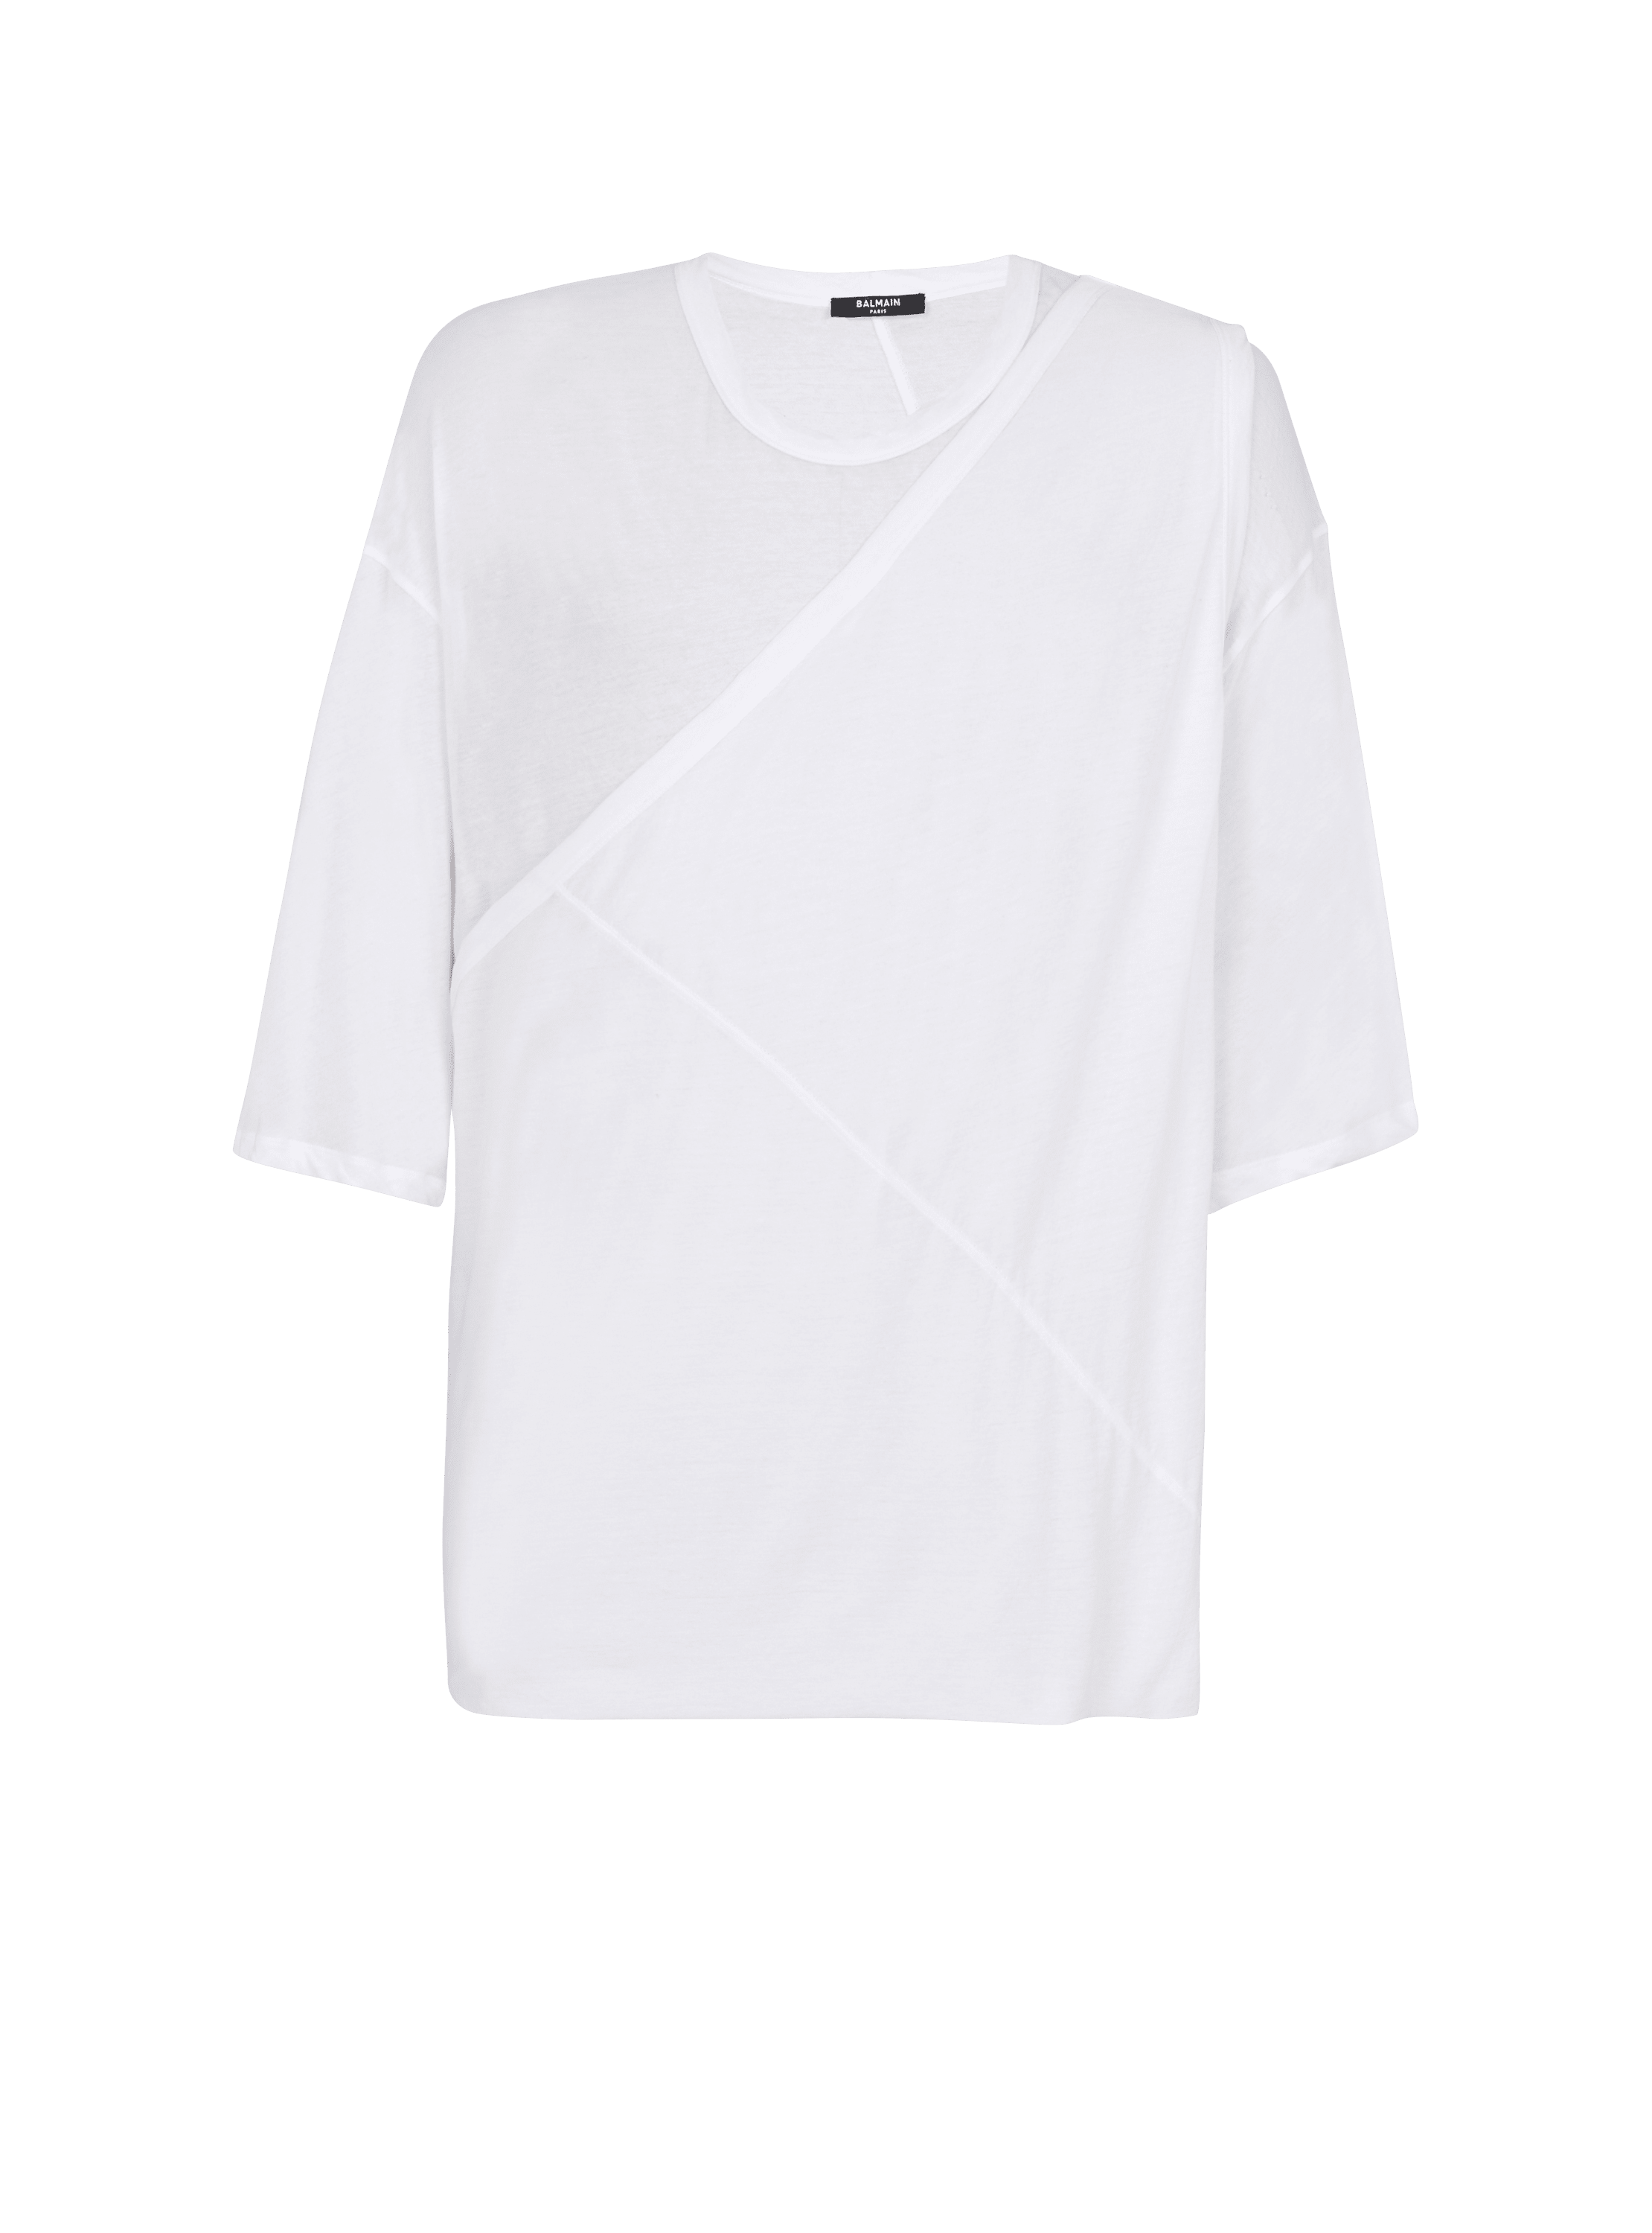 Long double thickness cotton T-shirt white - Men |